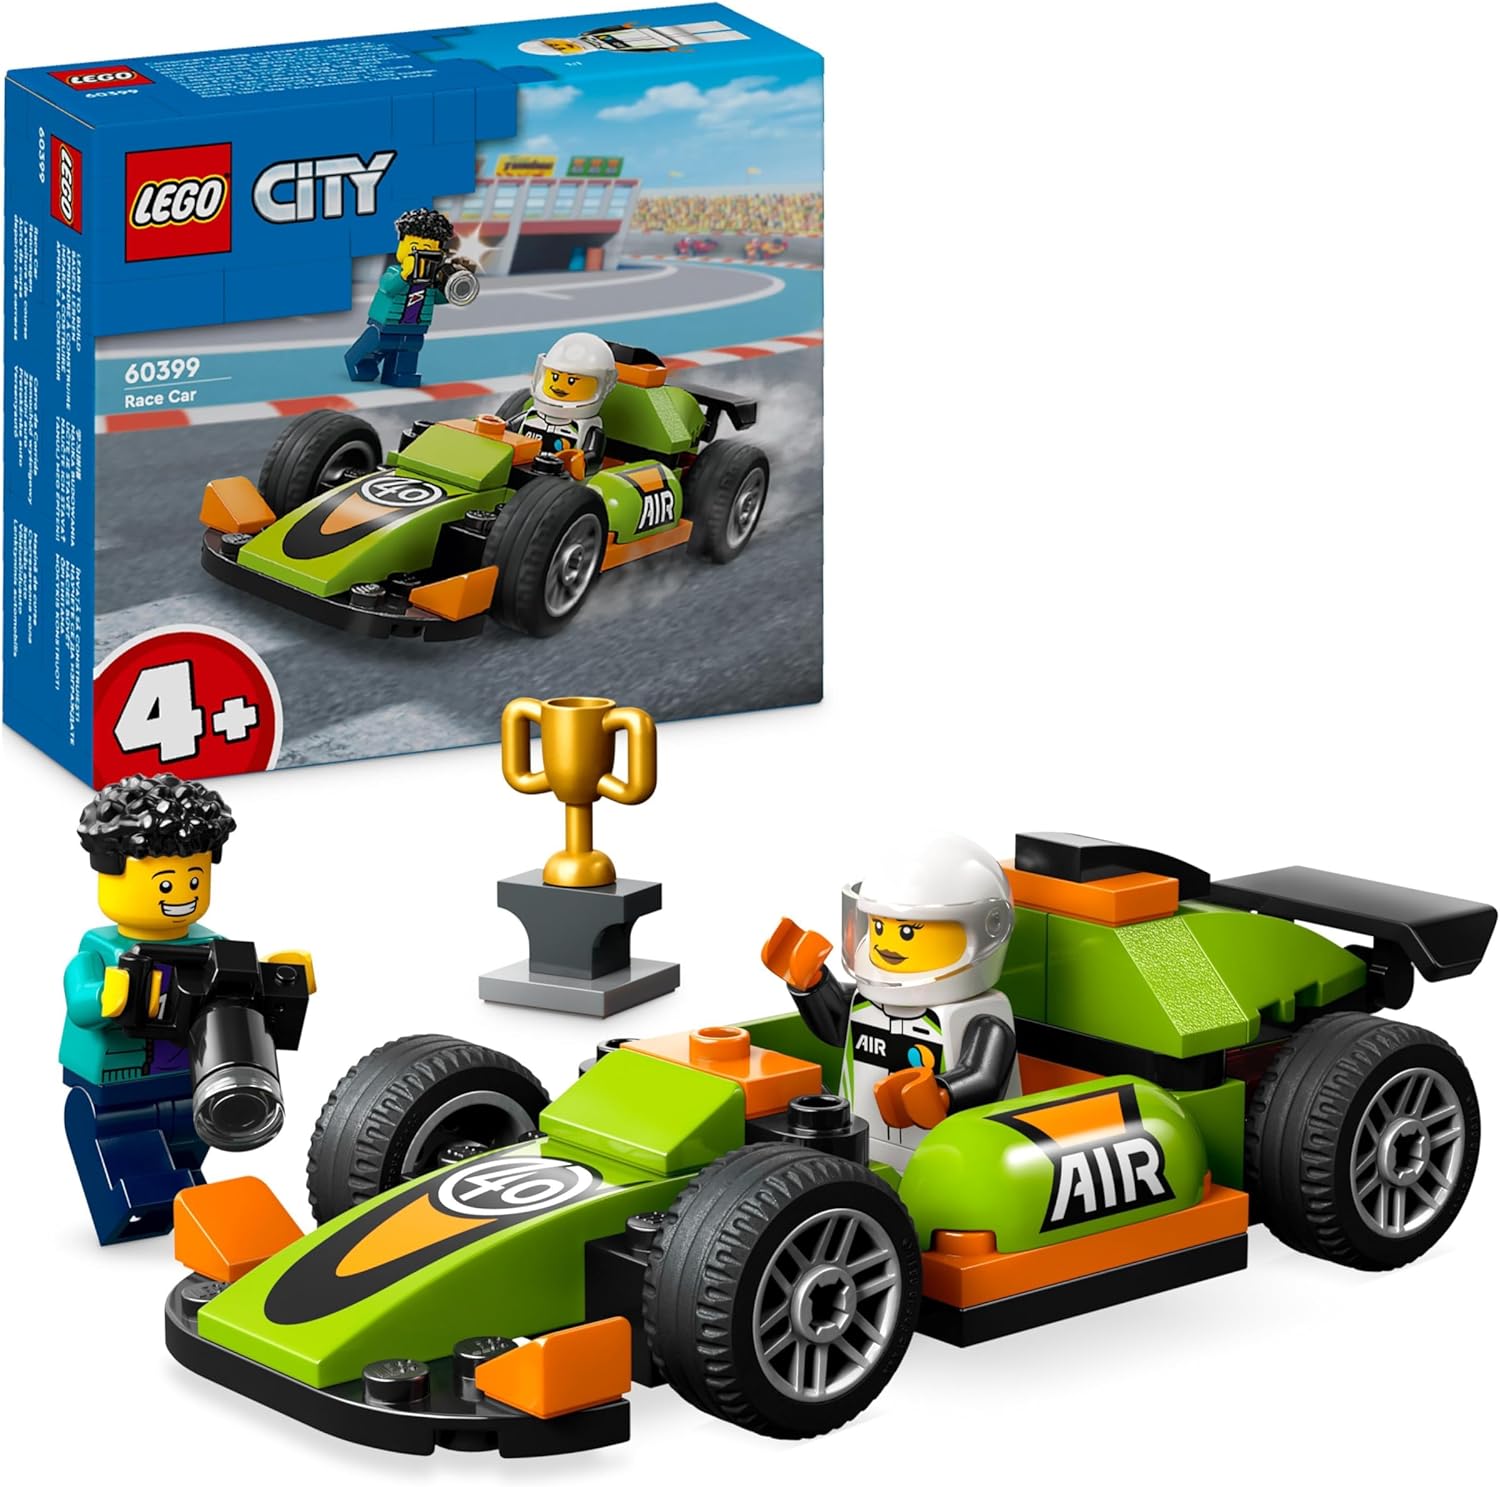 Honest Forwarder  LEGO City Racing Car, Toy Racing Car, Classic